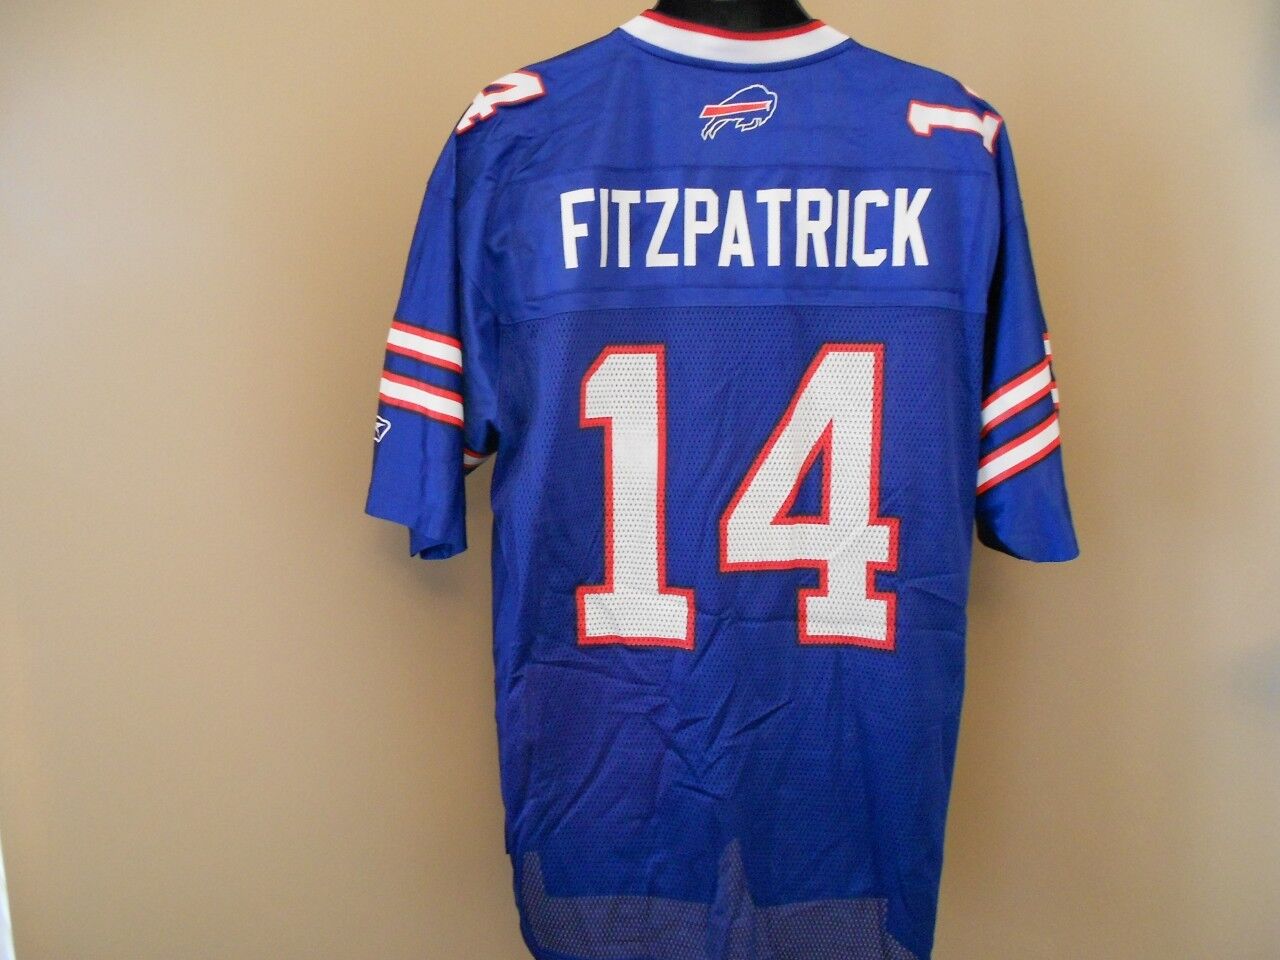 fitzpatrick bills jersey